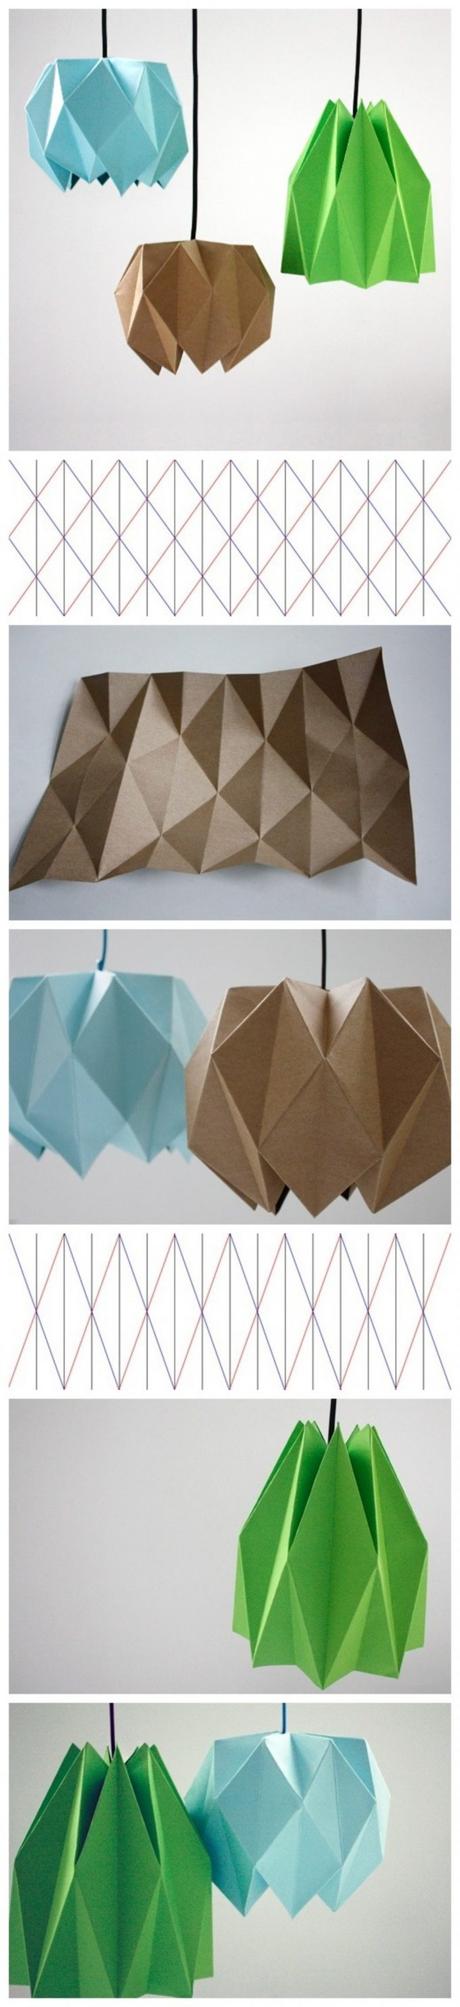 tuto lampe origami diy patron blog deco clemaroundthecorner